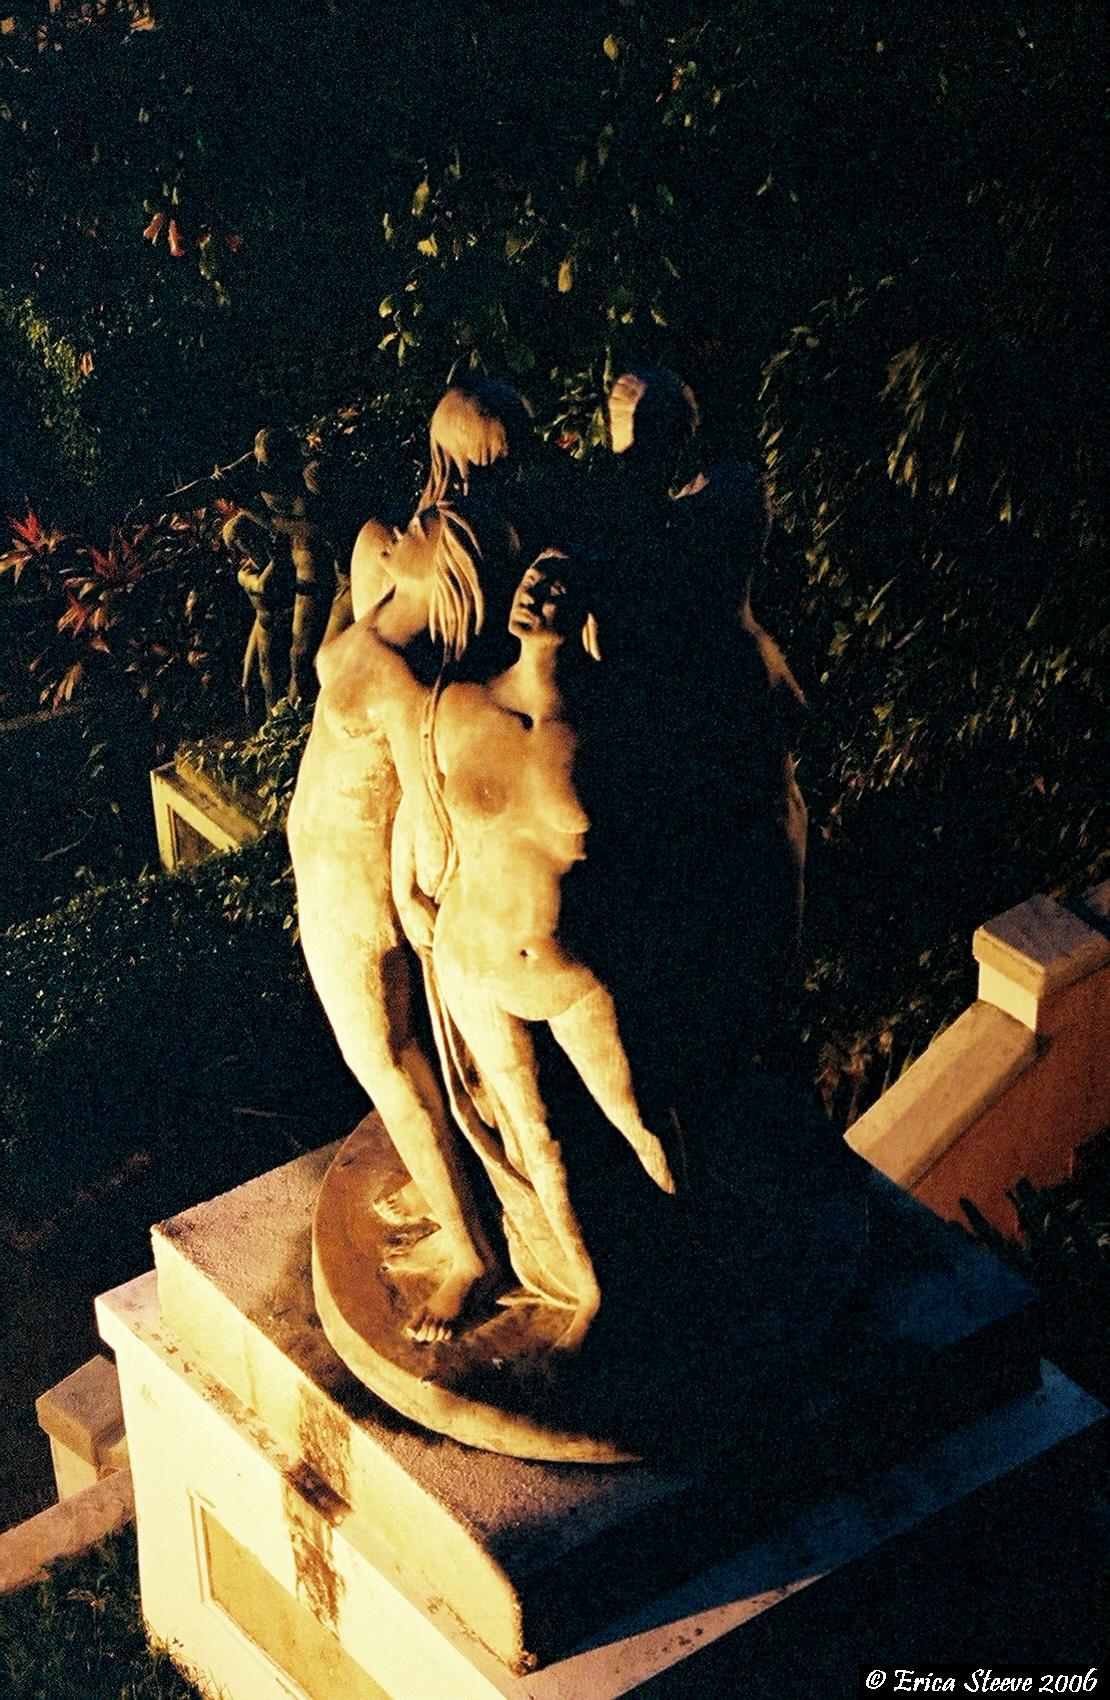 Statue in a garden in Puerto Rico